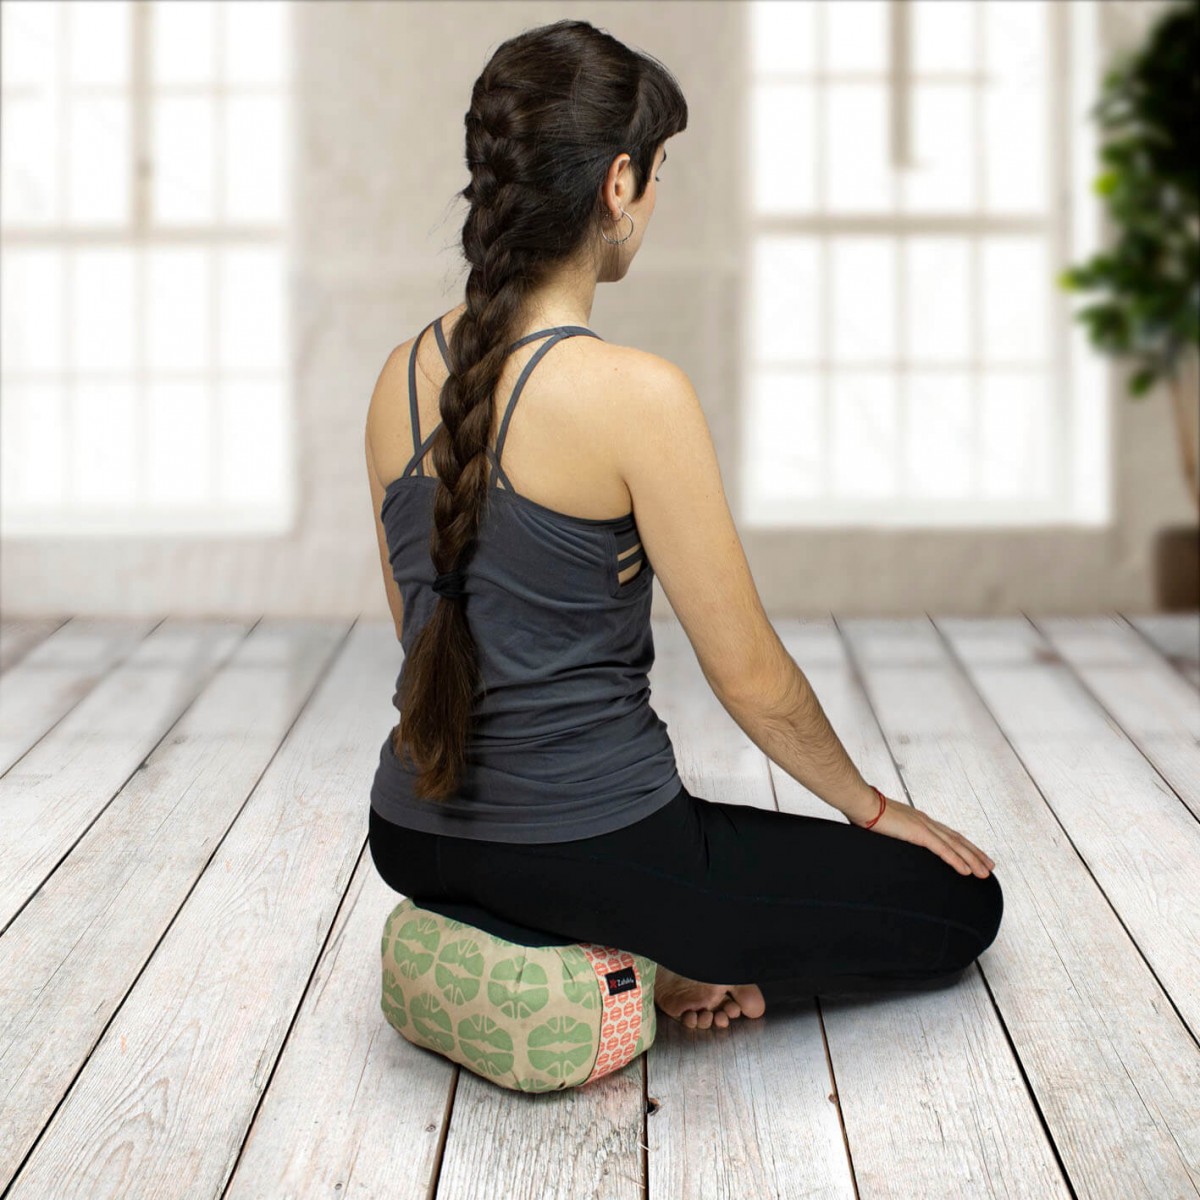 zafu redondo para meditación, cojín para mindfulness y yoga